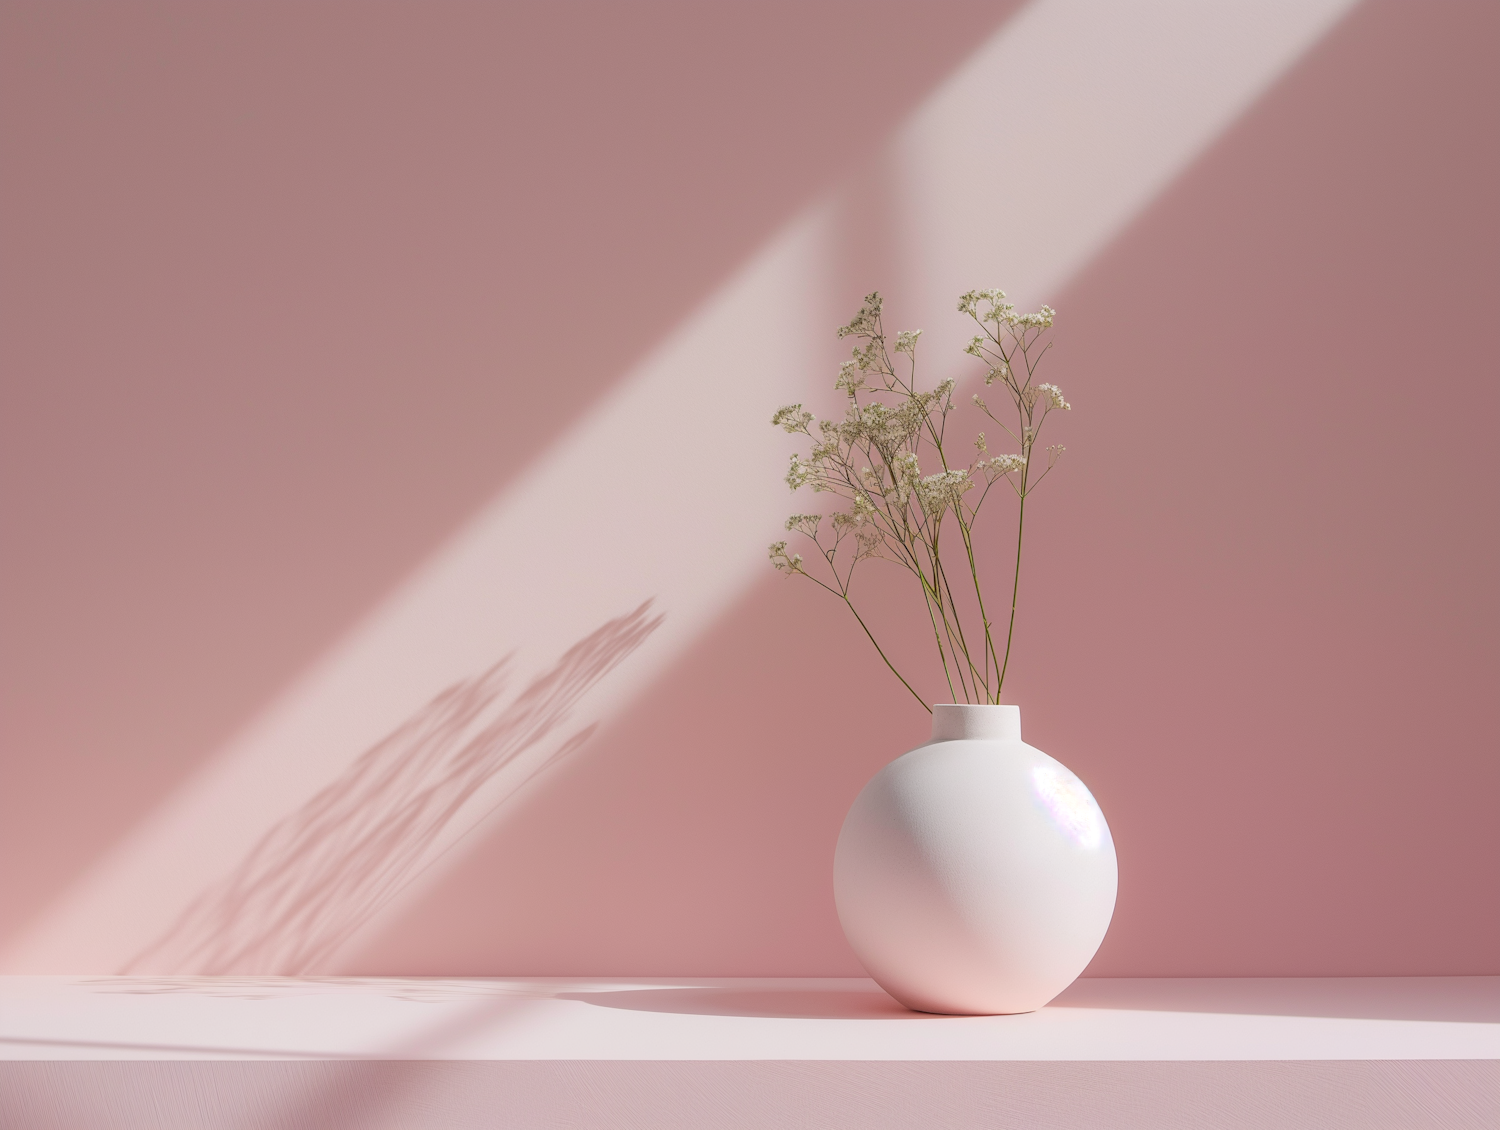 Elegant White Vase with Delicate Flowers